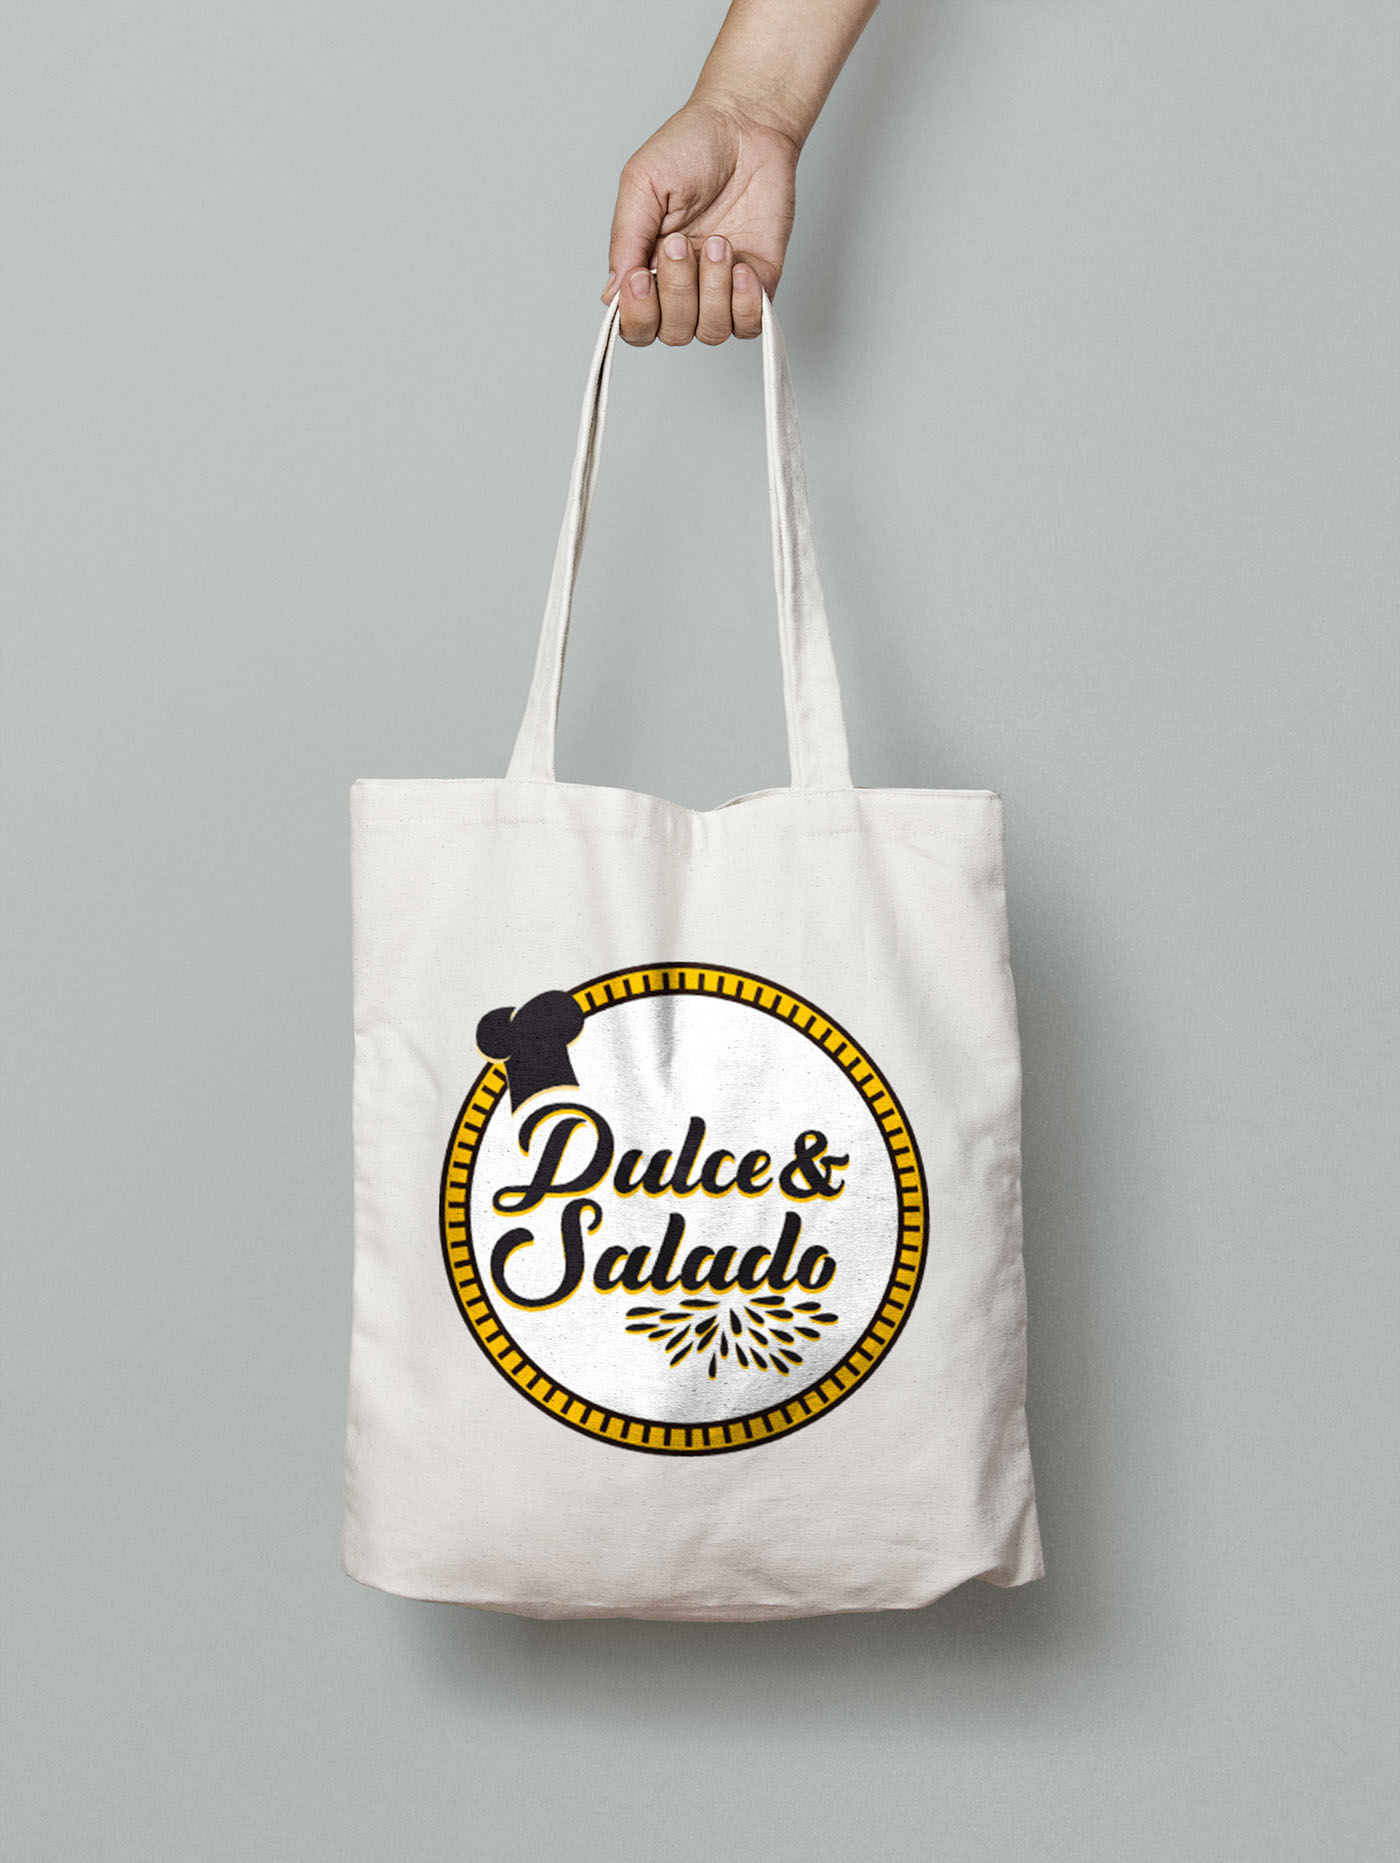 logo Logotipo Logotype marca brand Rastags Dulce salado sweet salty